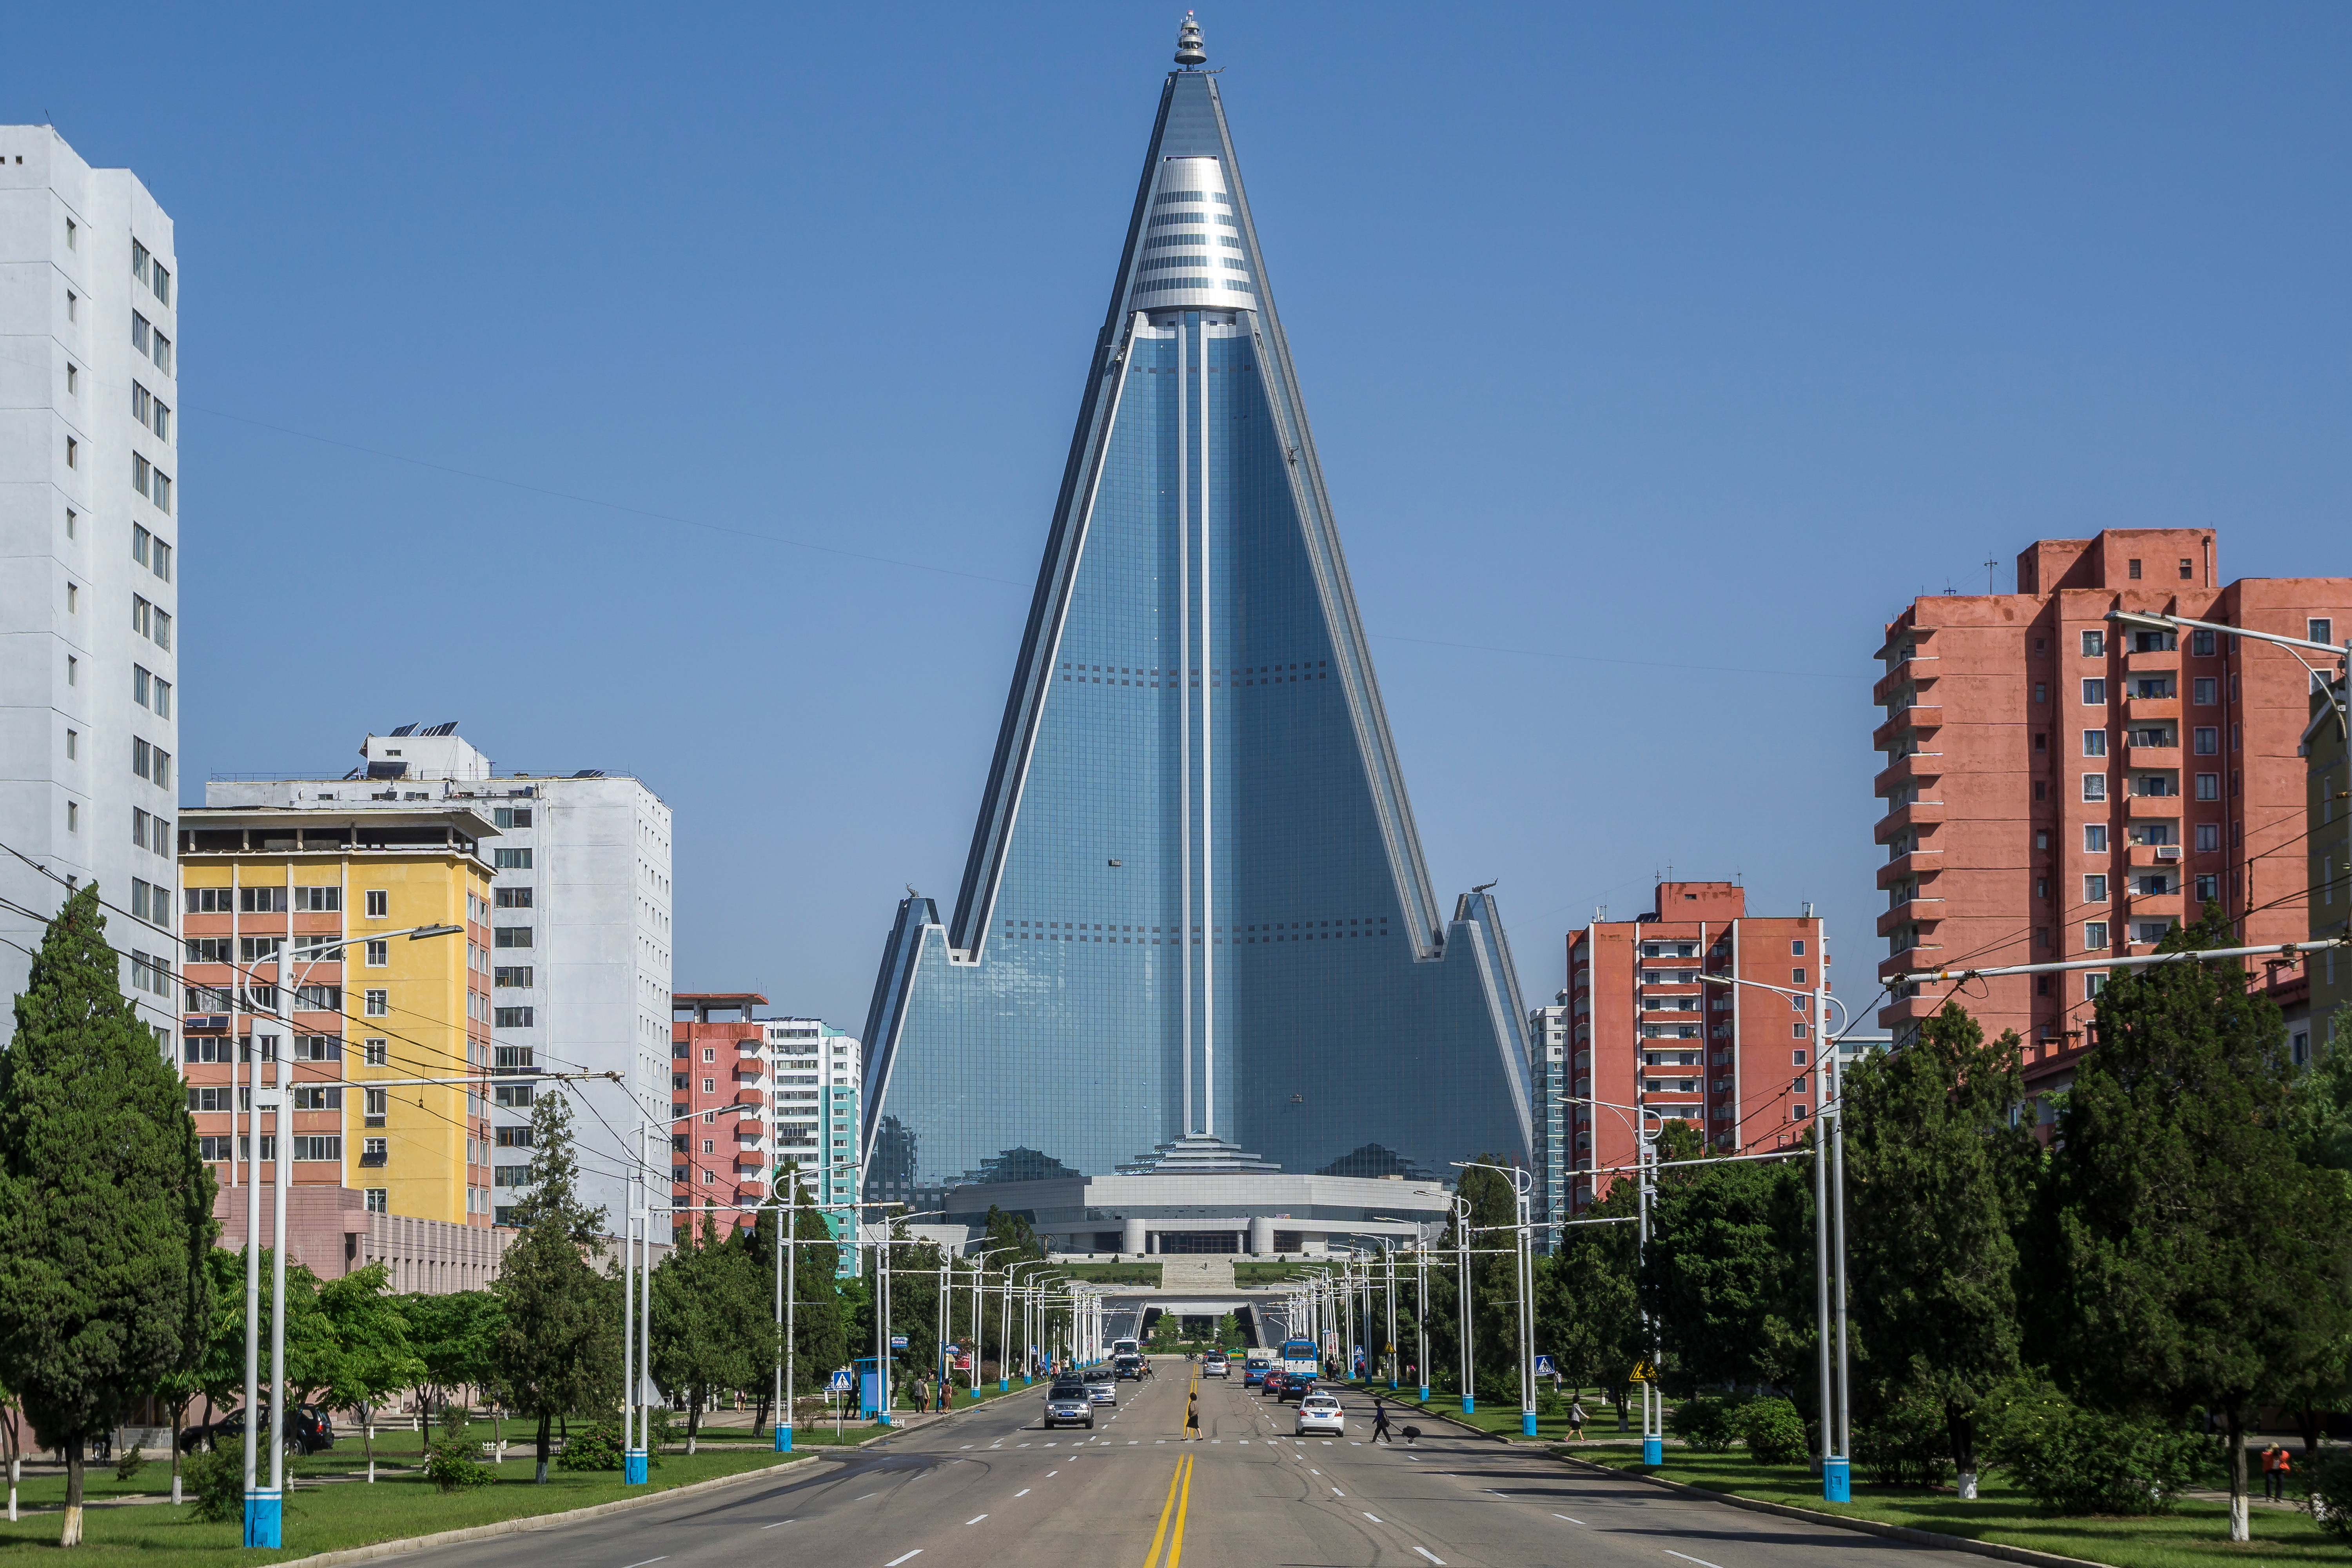 City and Architecture in North Korea